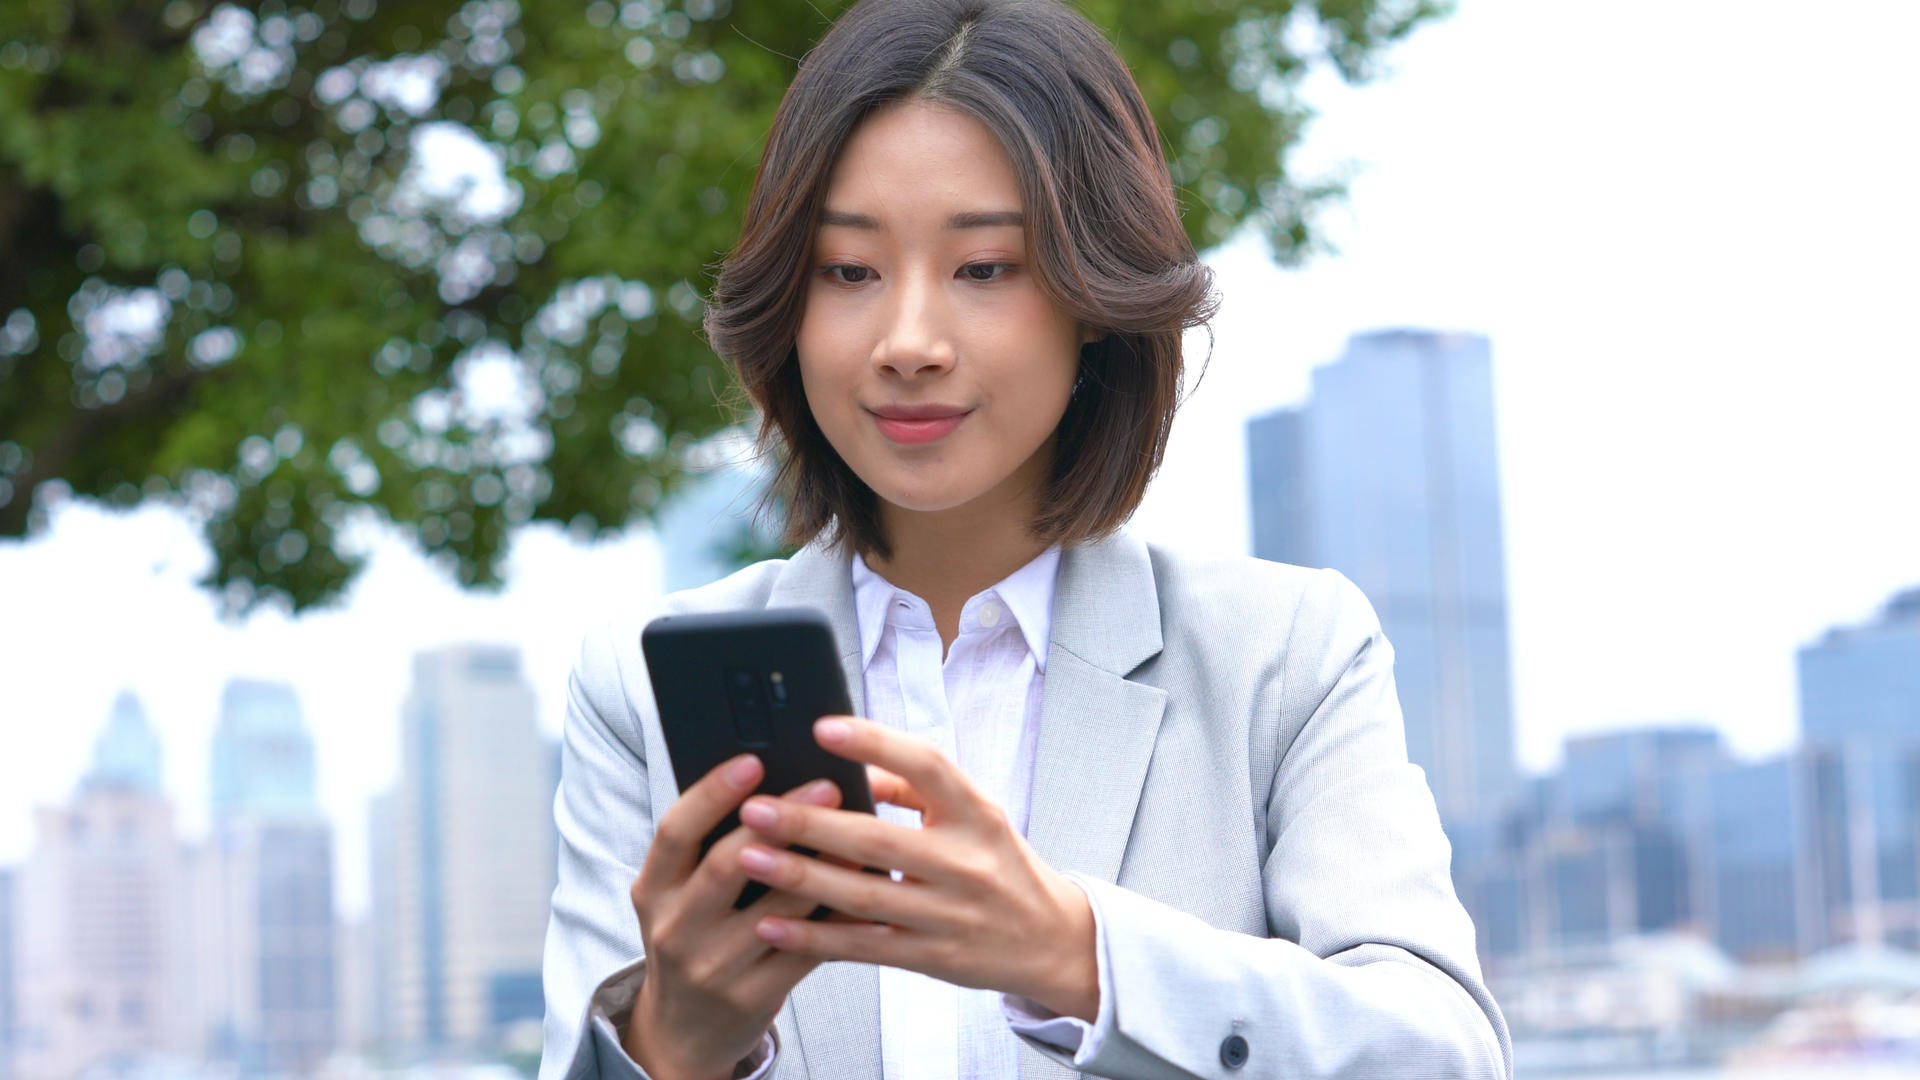 4k户外商务女性使用手机打字视频的预览图